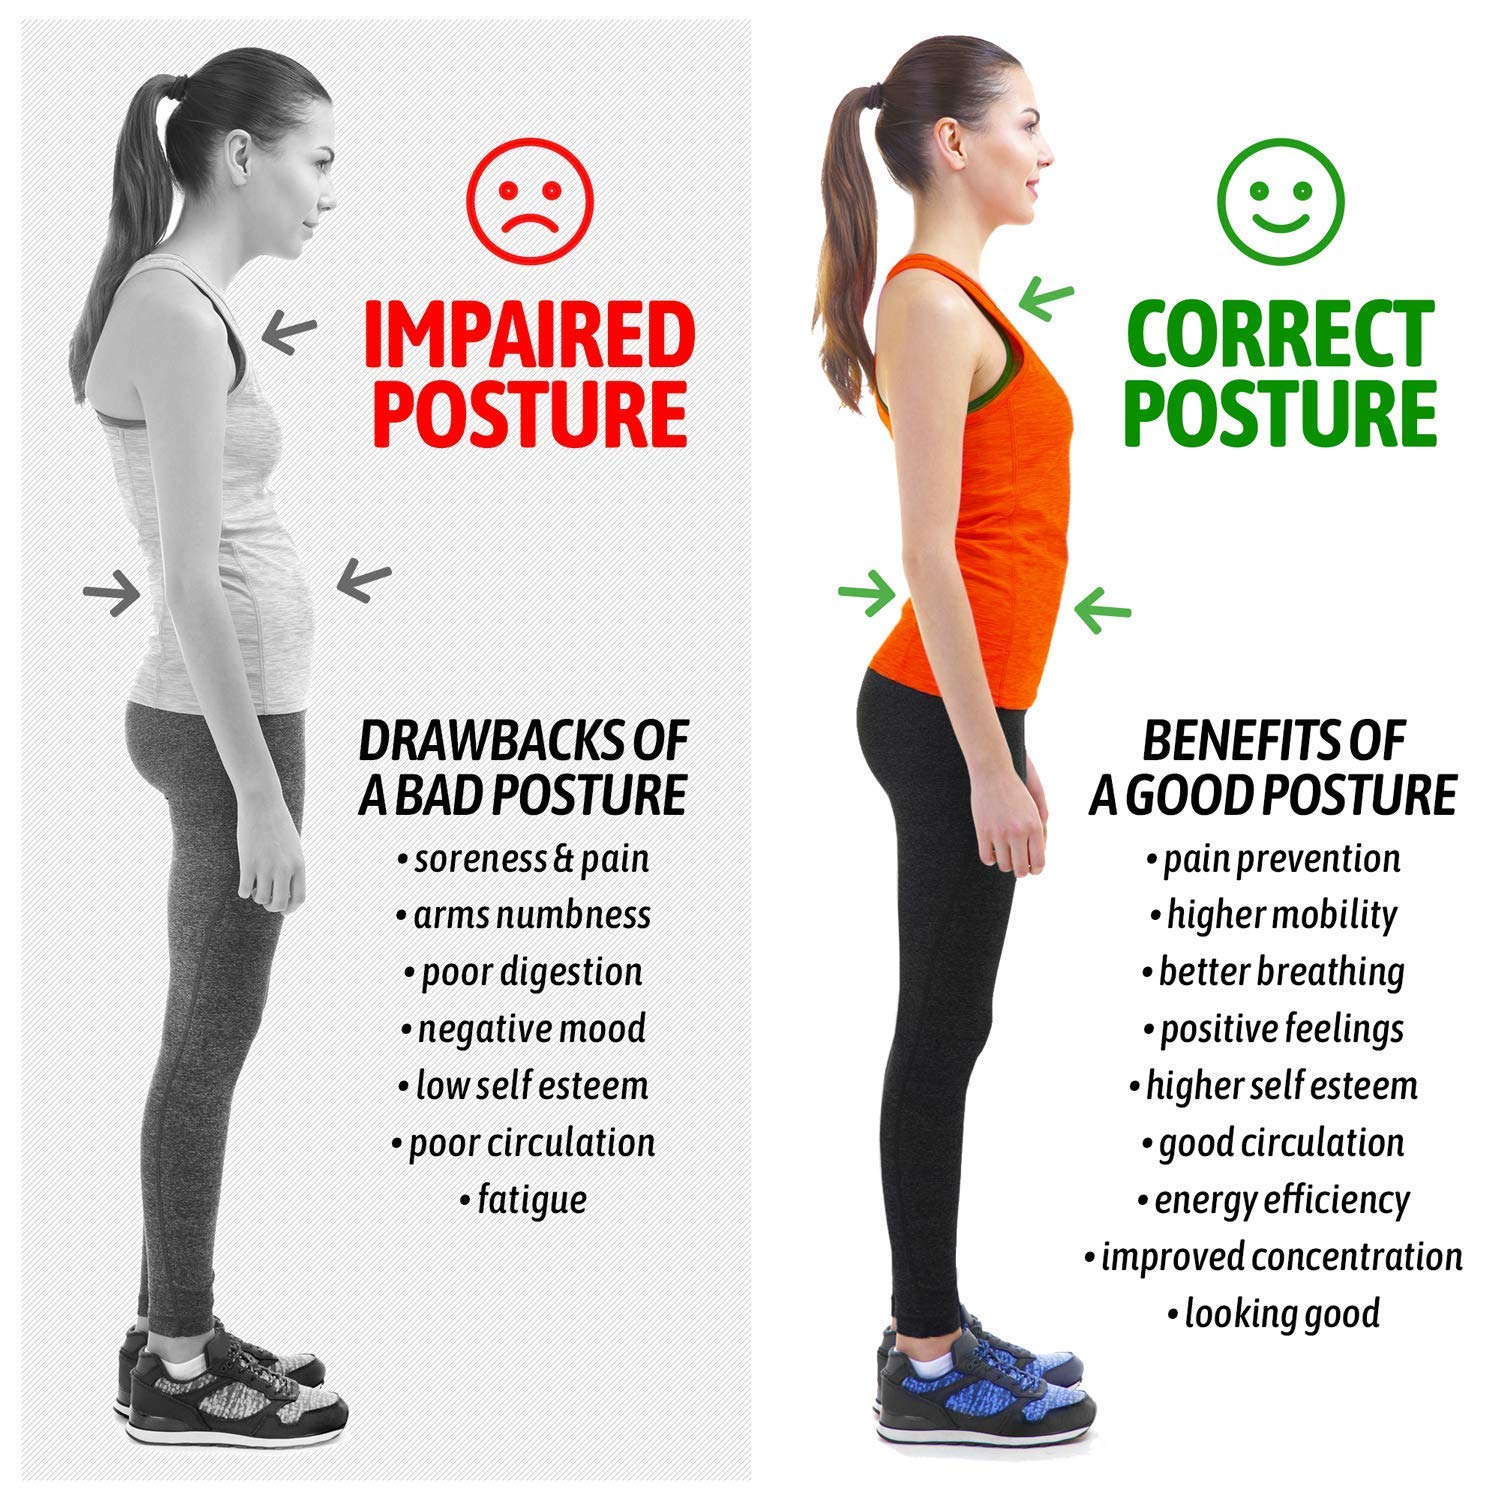 Posture Corrector for Men&Women,Bodywellness Fix Upper Back Brace for Clavicle Support,Adjustable Back Straightener&Providing Pain Relief from Neck,Back&Shoulder Under Clothes(Regular),1Count(Packof1)